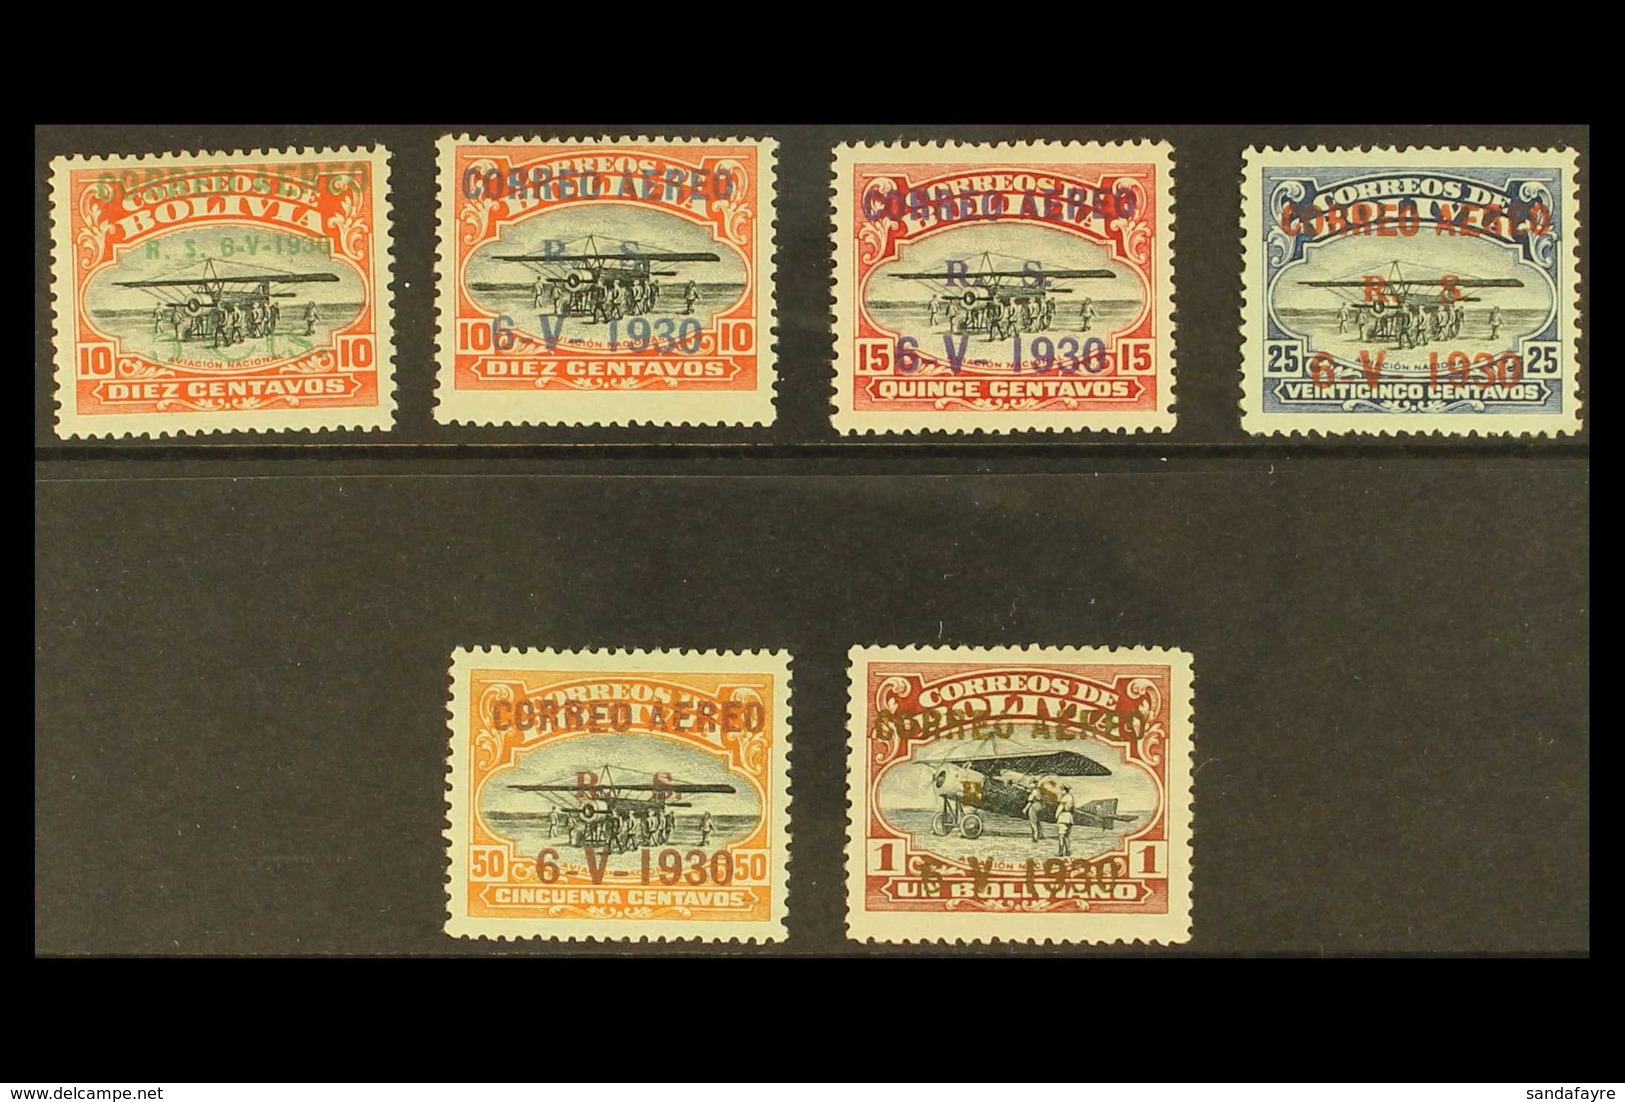 1930 Air "CORREO AEREO" Overprints Complete Basic Set (SG 228/35, Scott C11/12, C14/16 & C18), Very Fine Mint, Very Fres - Bolivien